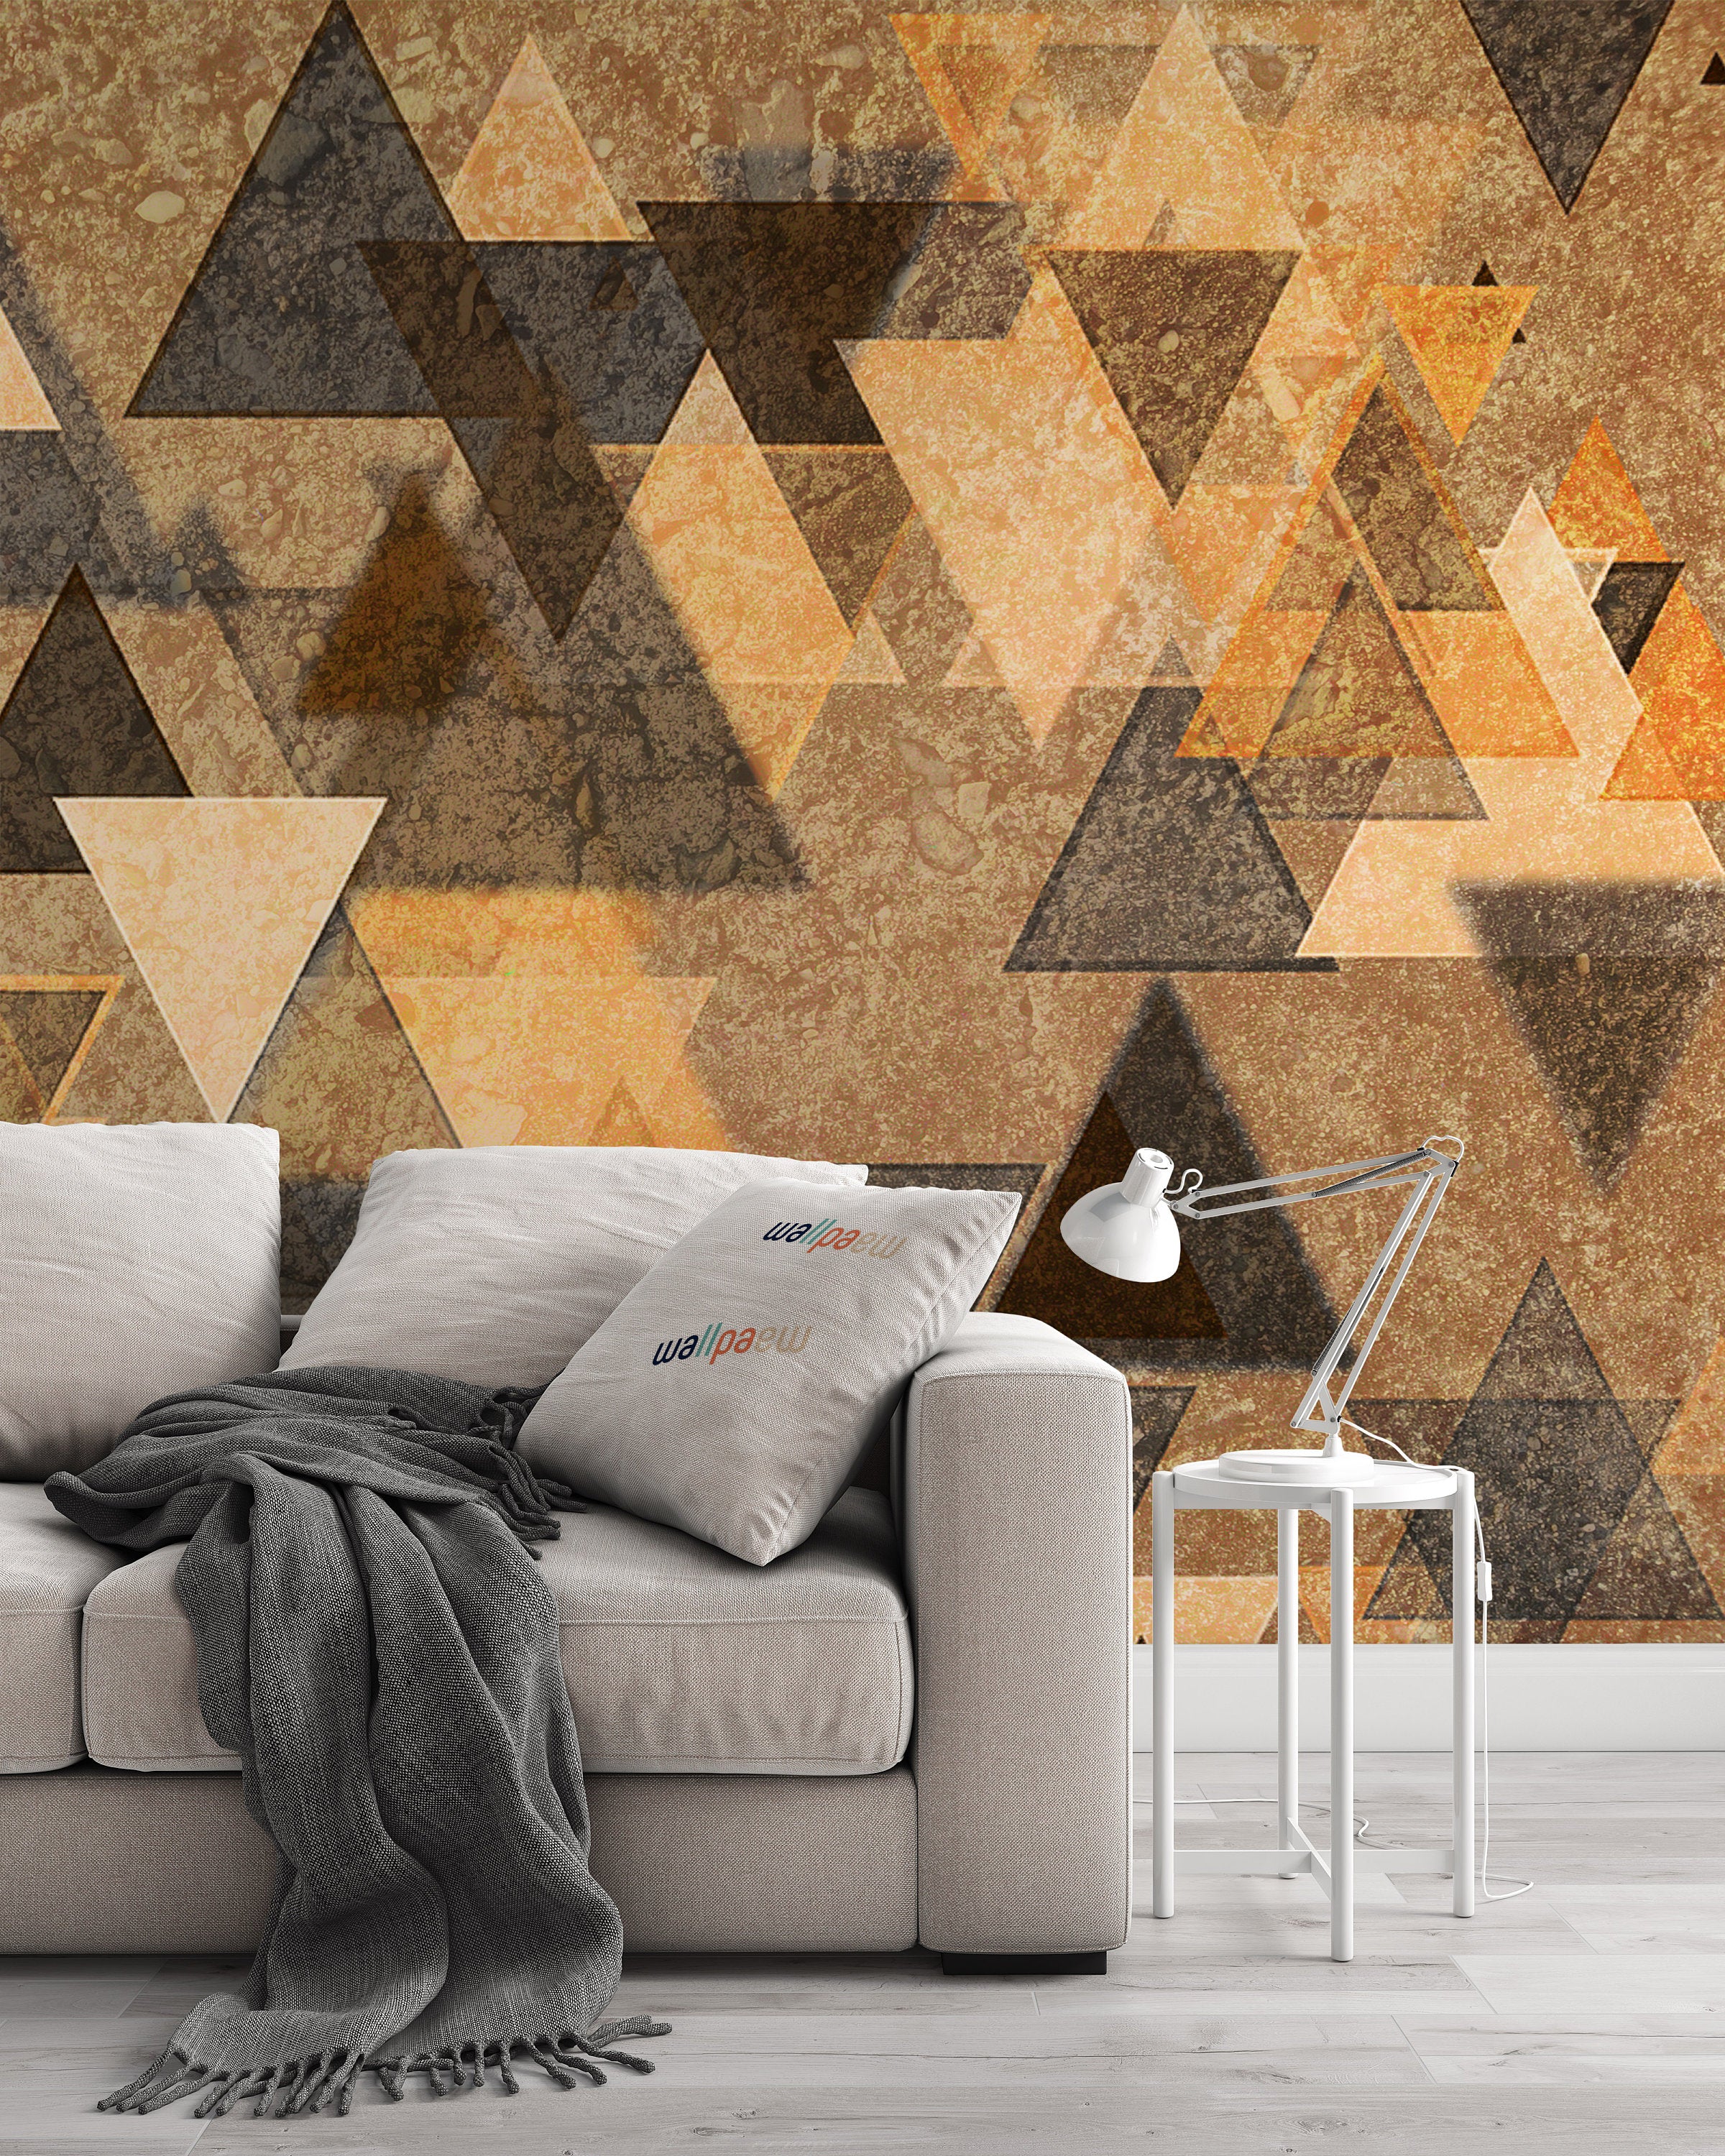 Random Triangle Geometric Shapes Art Wallpaper Self Adhesive Peel and Stick Wall Sticker Wall Decoration Modern Design Removable